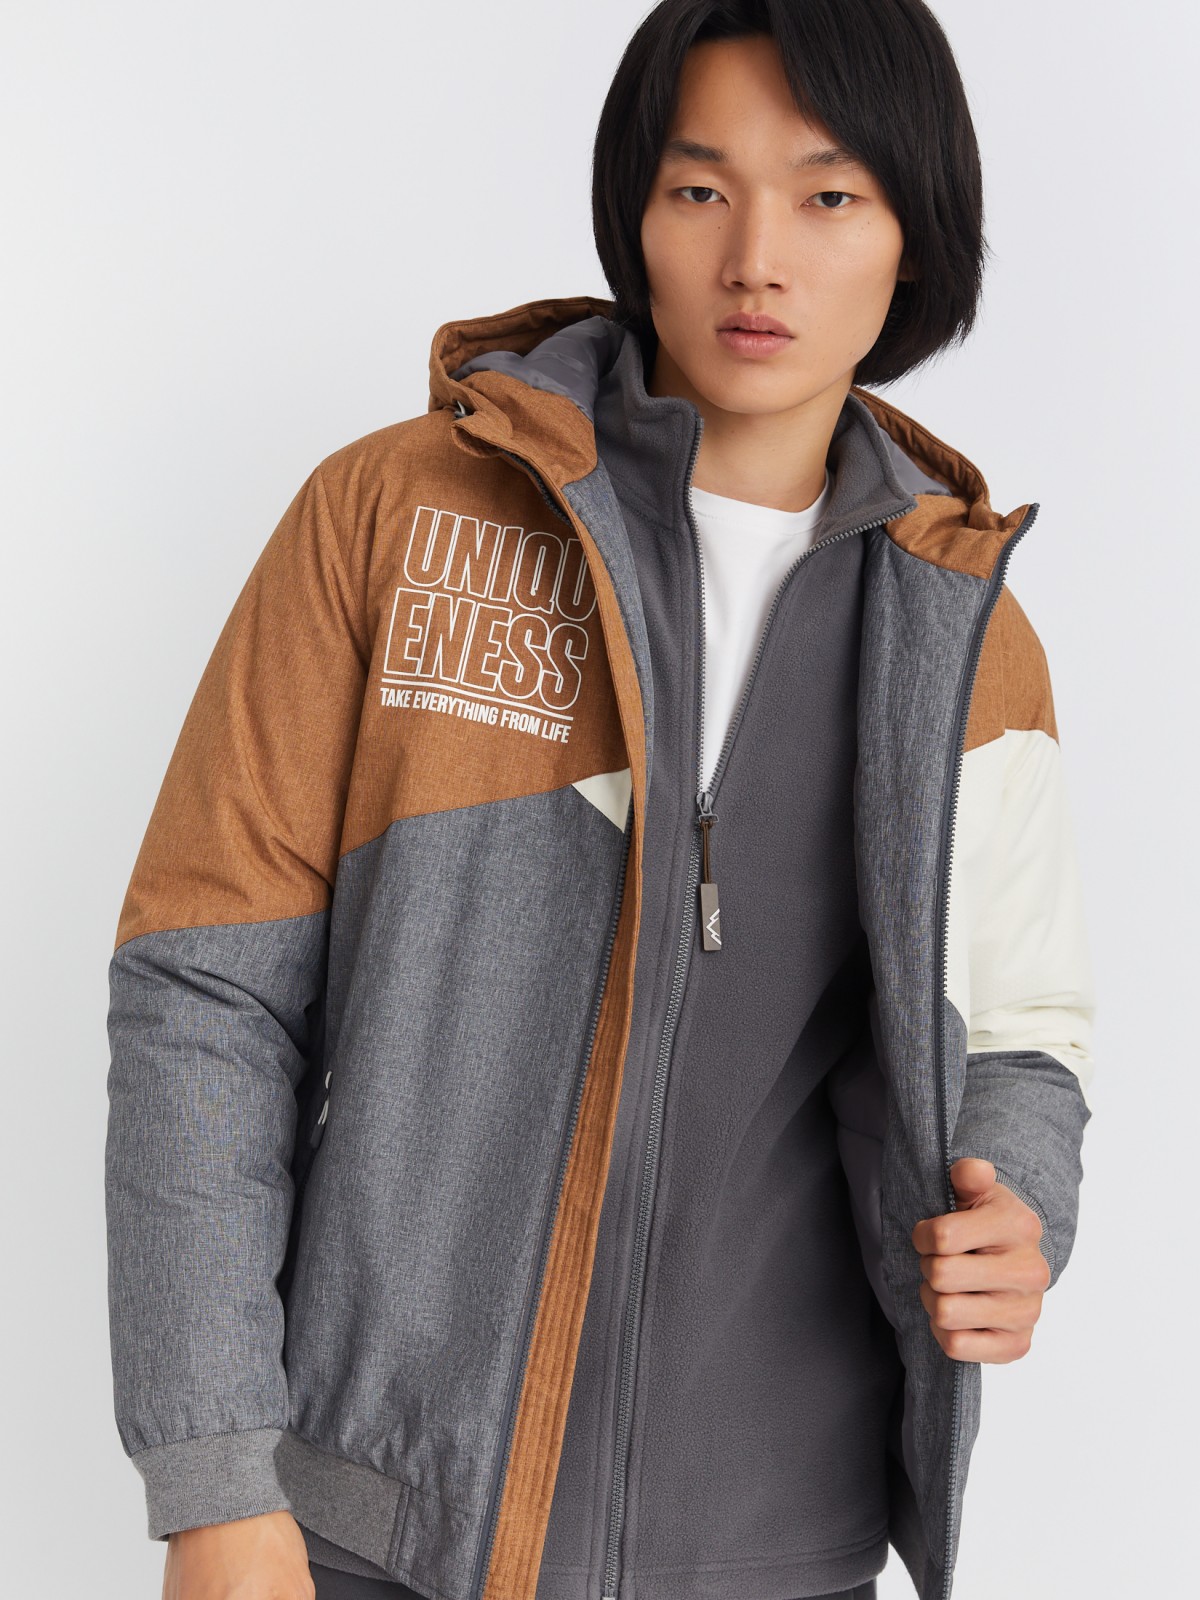 Утеплённая куртка-бомбер на синтепоне с капюшоном zolla 01334510L234, цвет серый, размер S